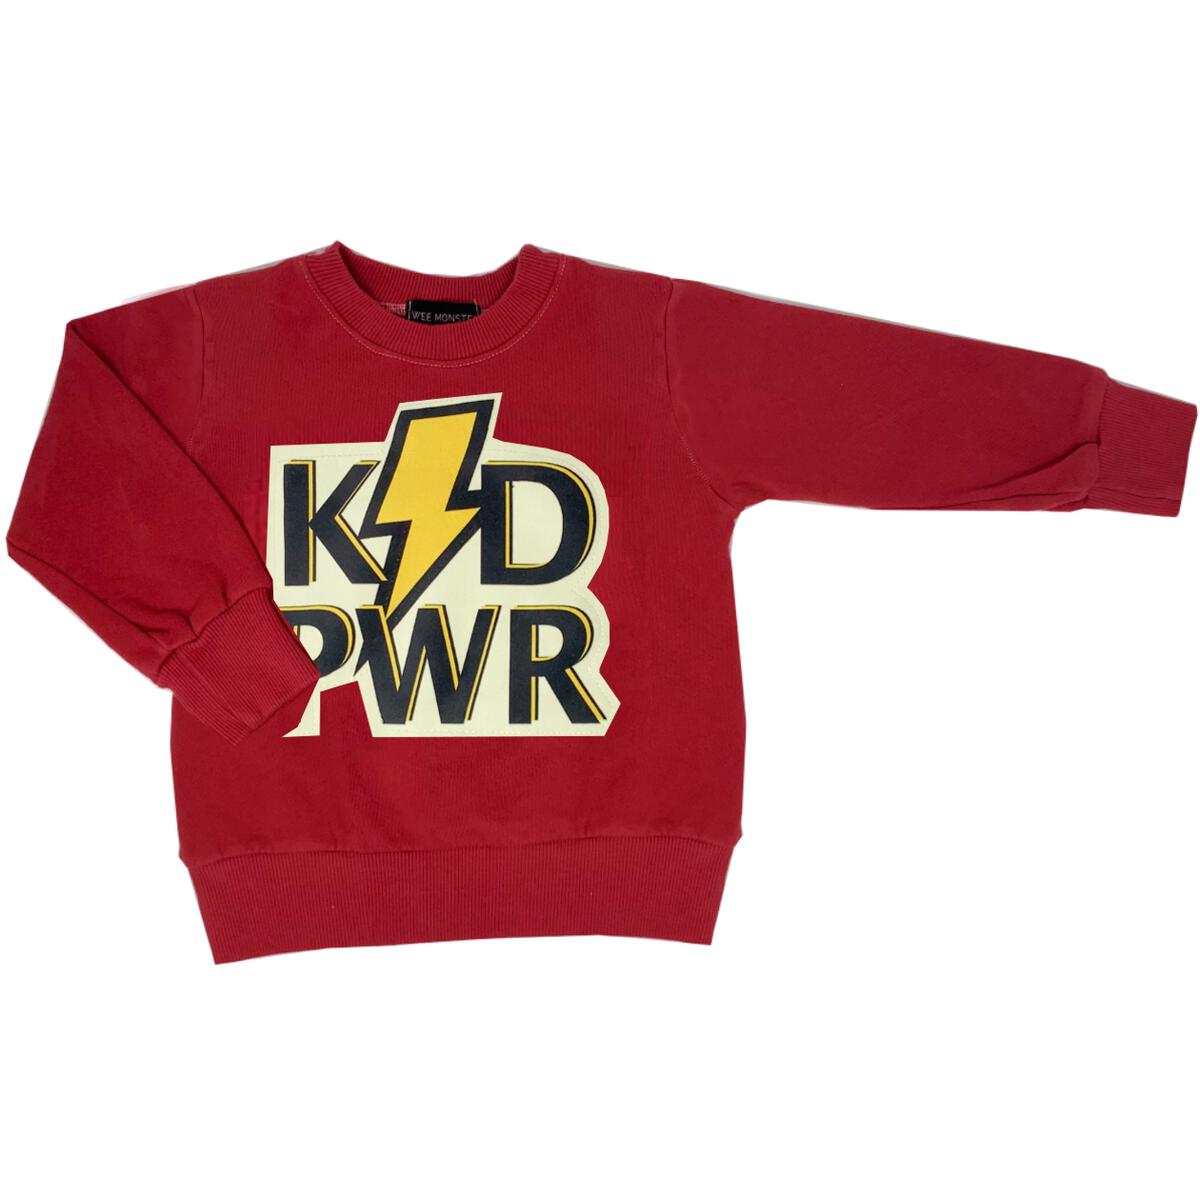 Kid Pwr Sweater